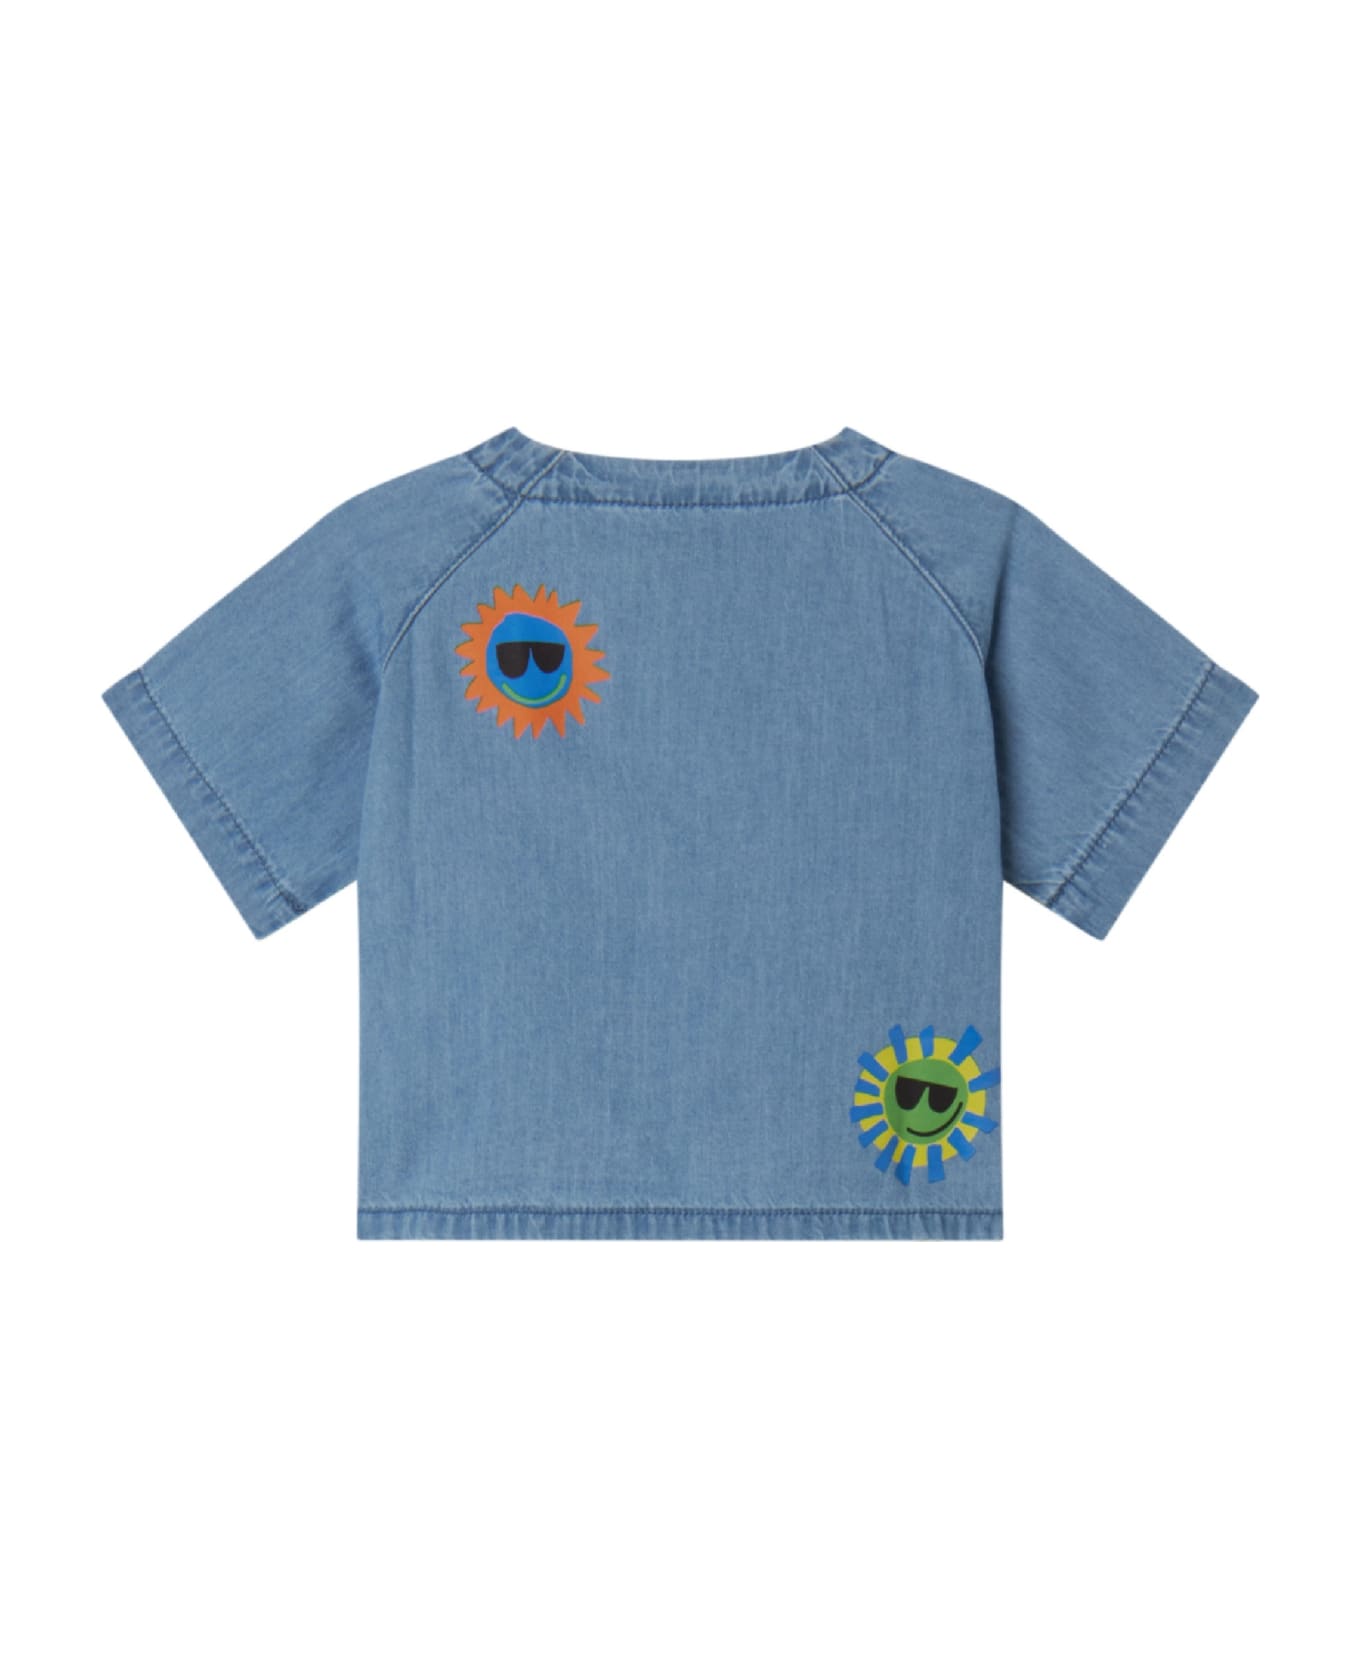 Stella McCartney Kids Camicia Con Stampa - Light blue